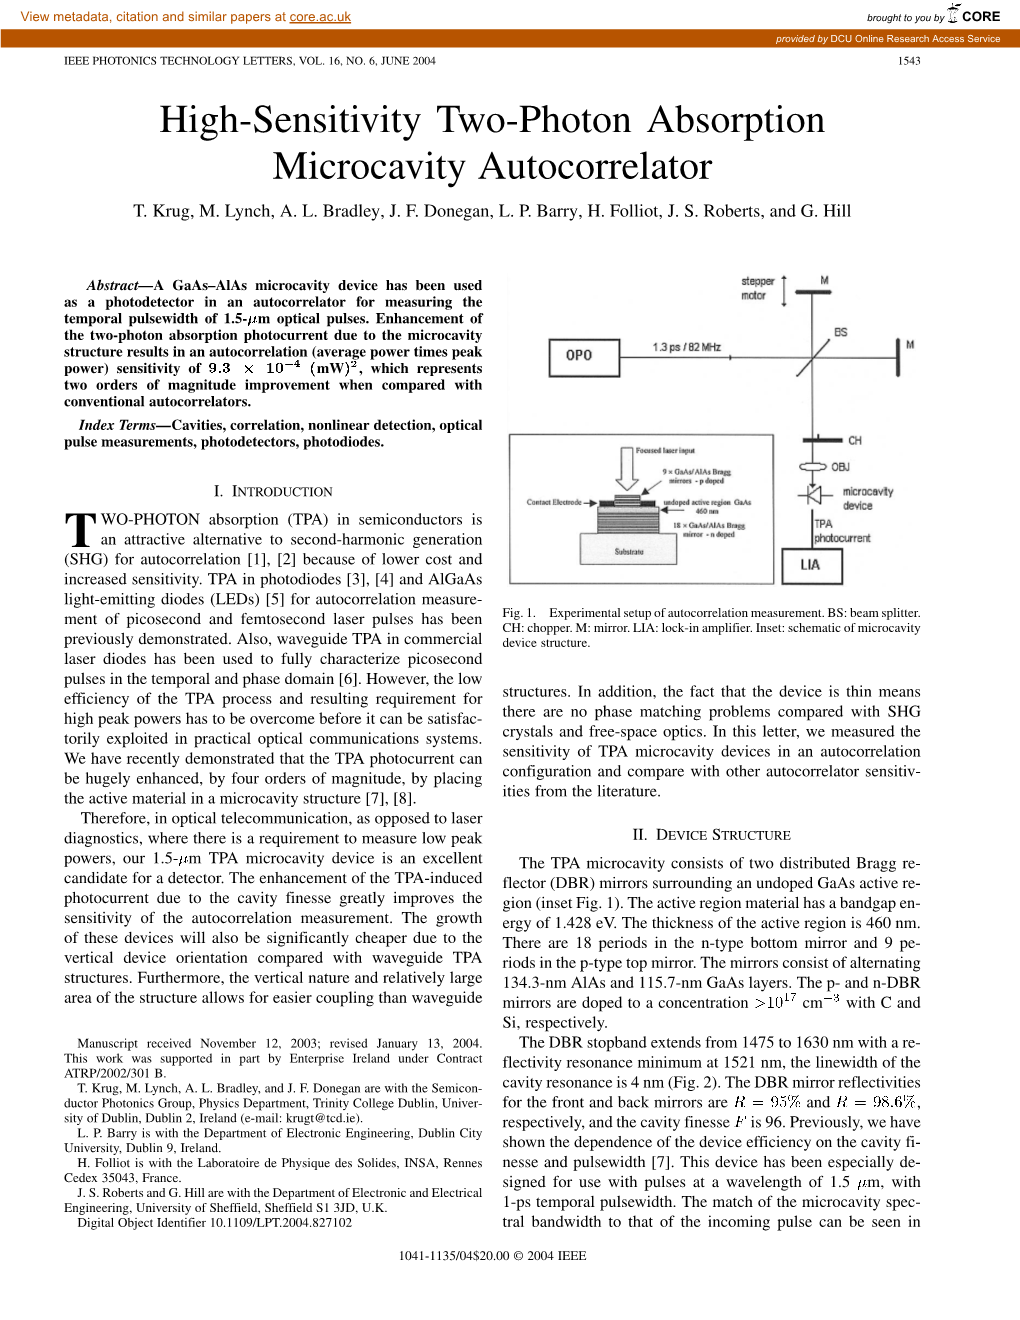 High-Sensitivity Two-Photon Absorption Microcavity Autocorrelator T